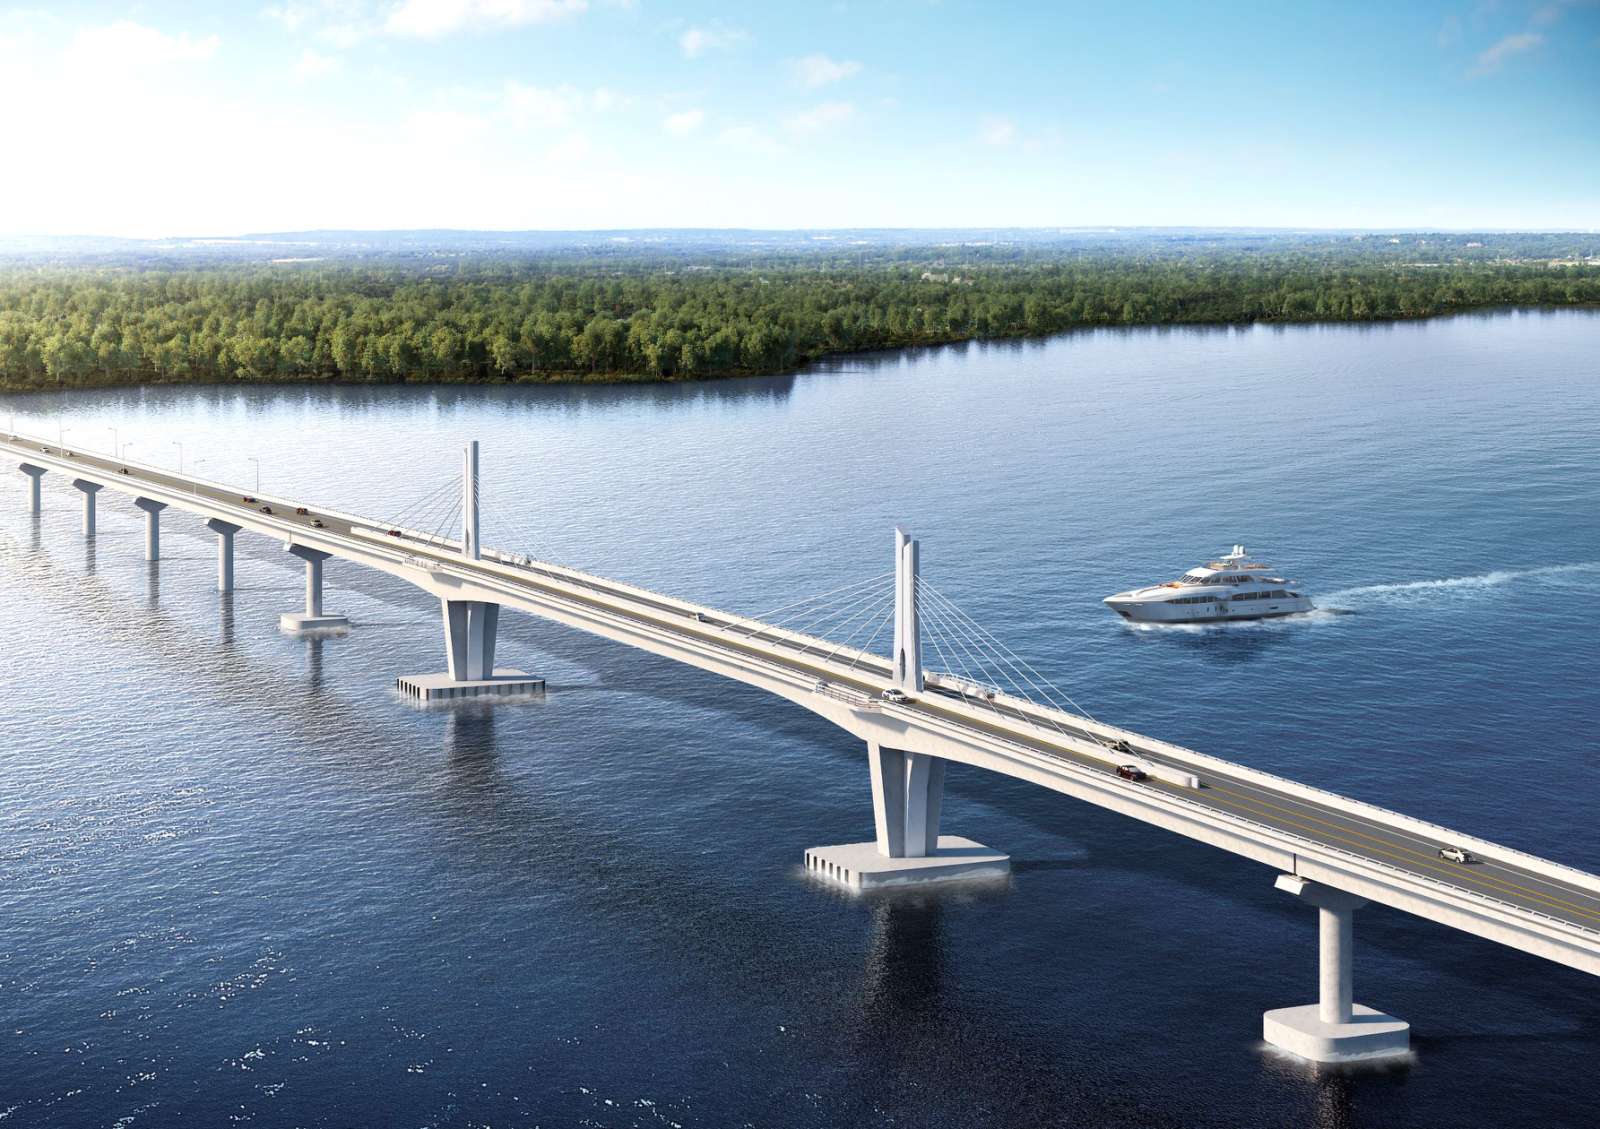 MINDANAO’S LONGEST BRIDGE WILL BE COMPLETED IN 2023